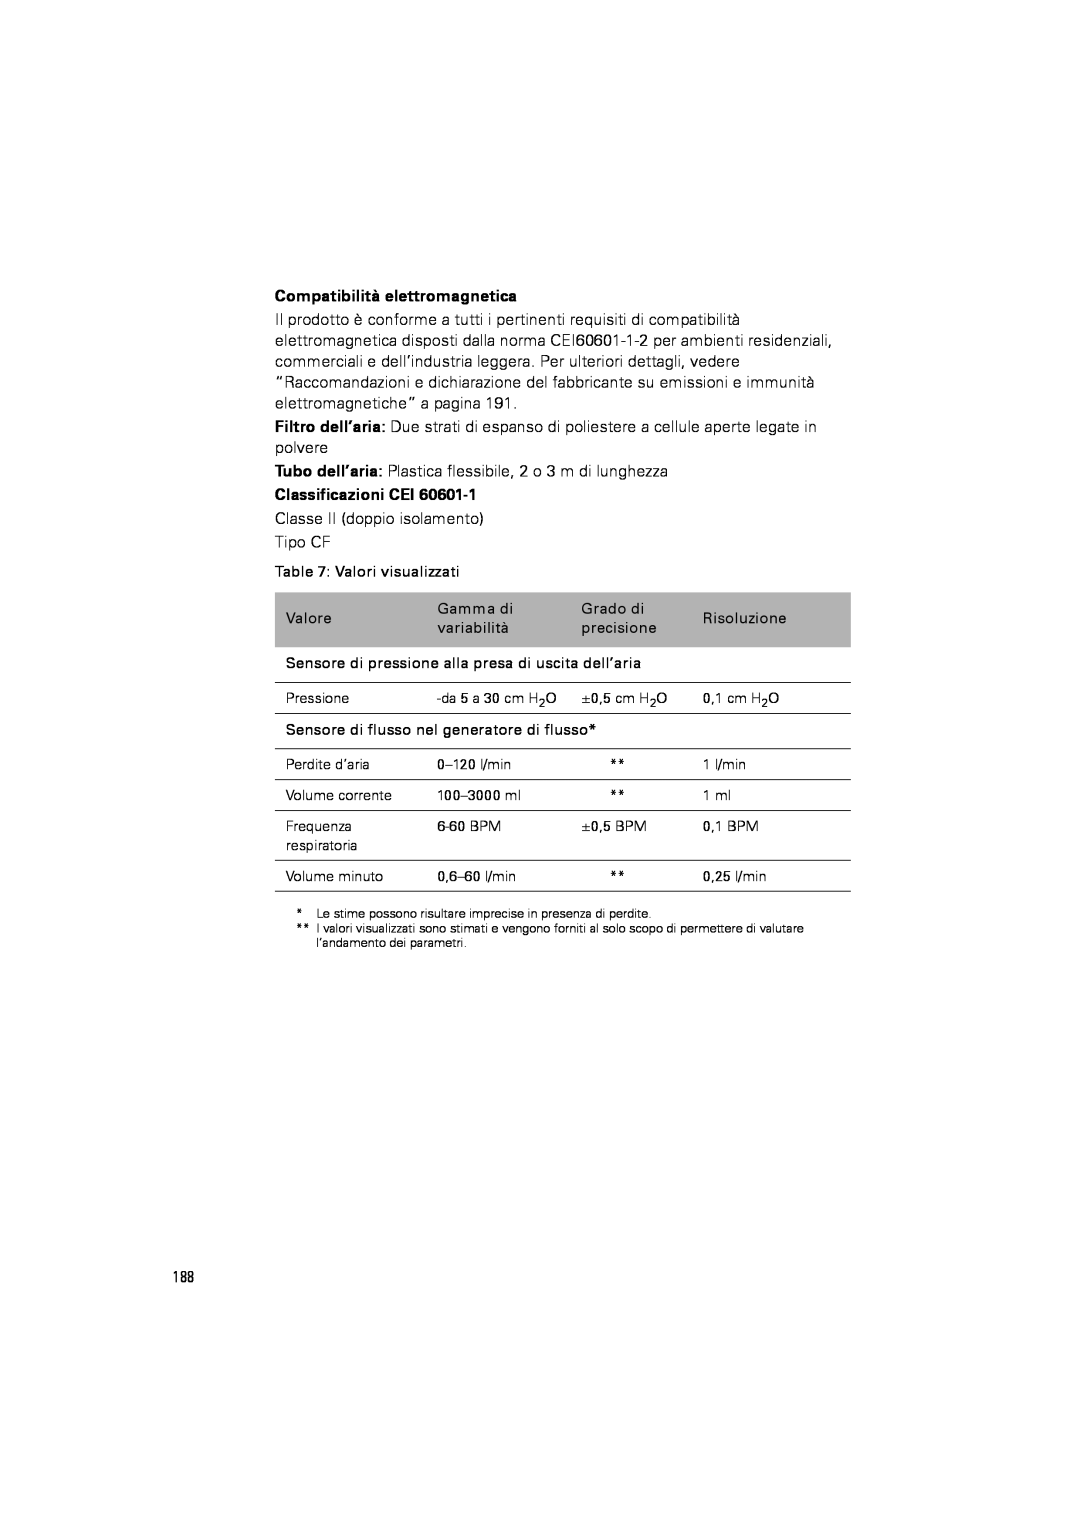 ResMed III & III ST user manual Compatibilità elettromagnetica 